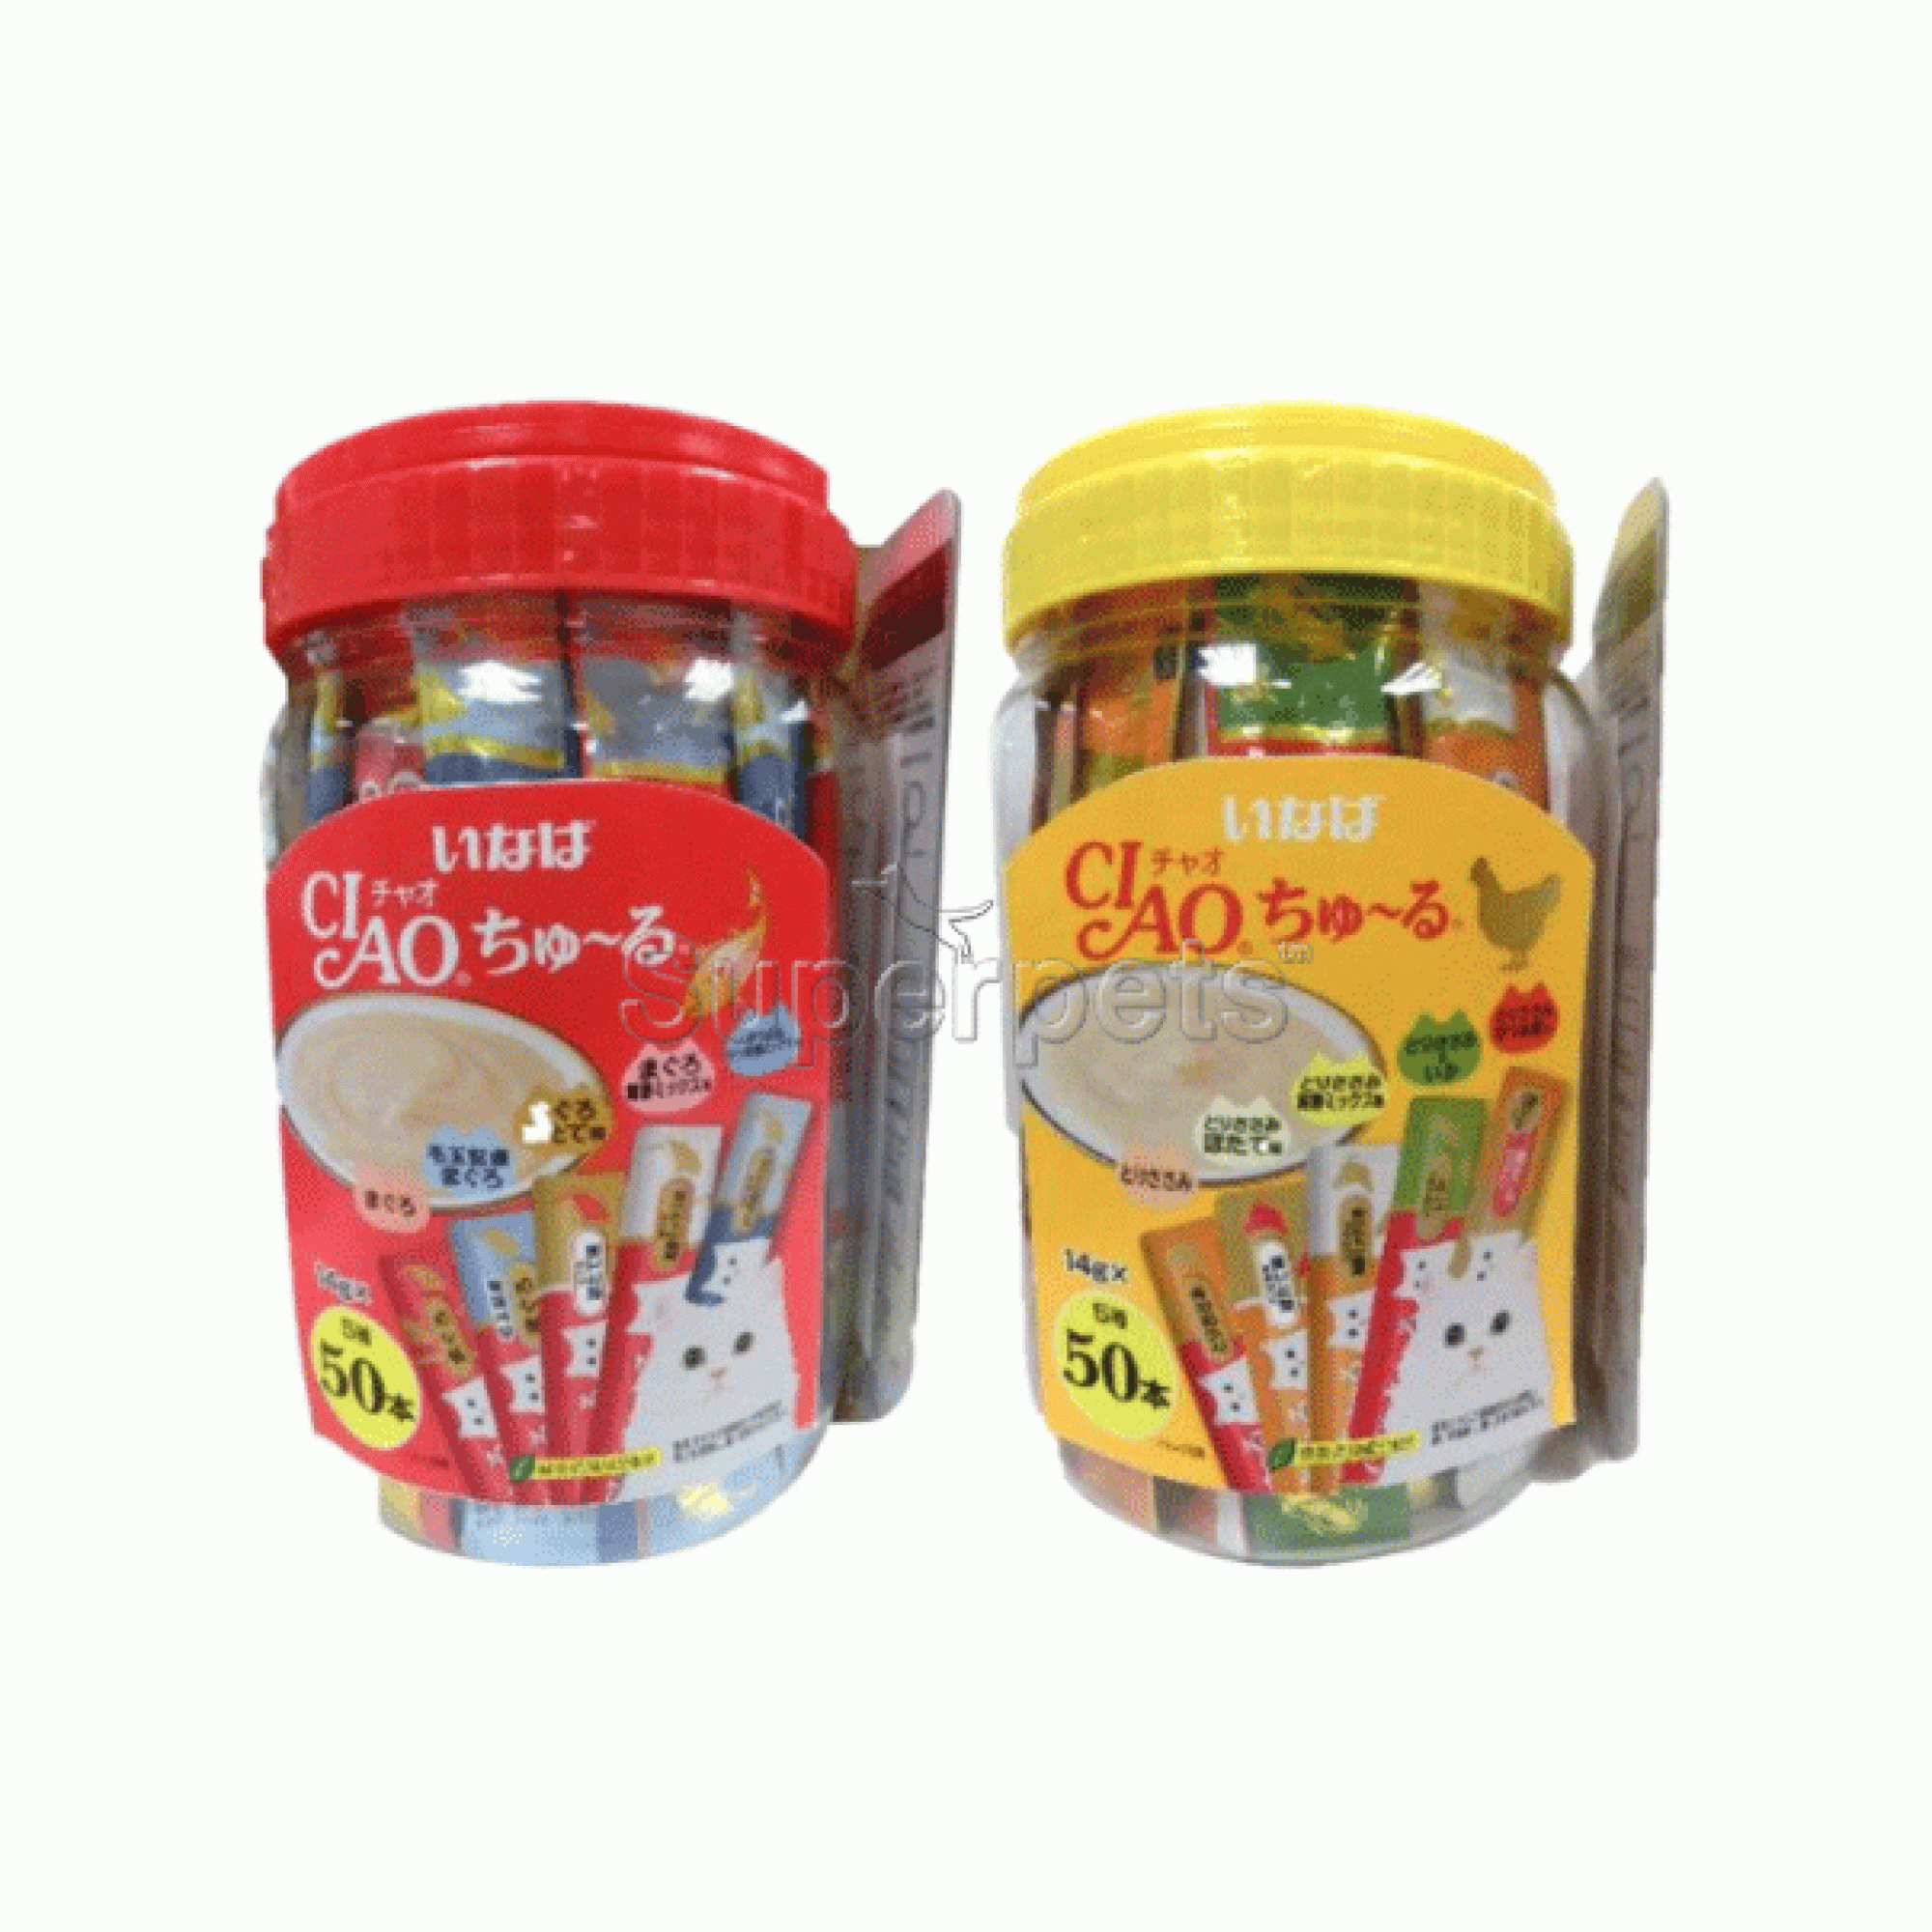 Ciao - Cat CIST12T Churu Chicken Mix Festive Pack 14g x 50pcs